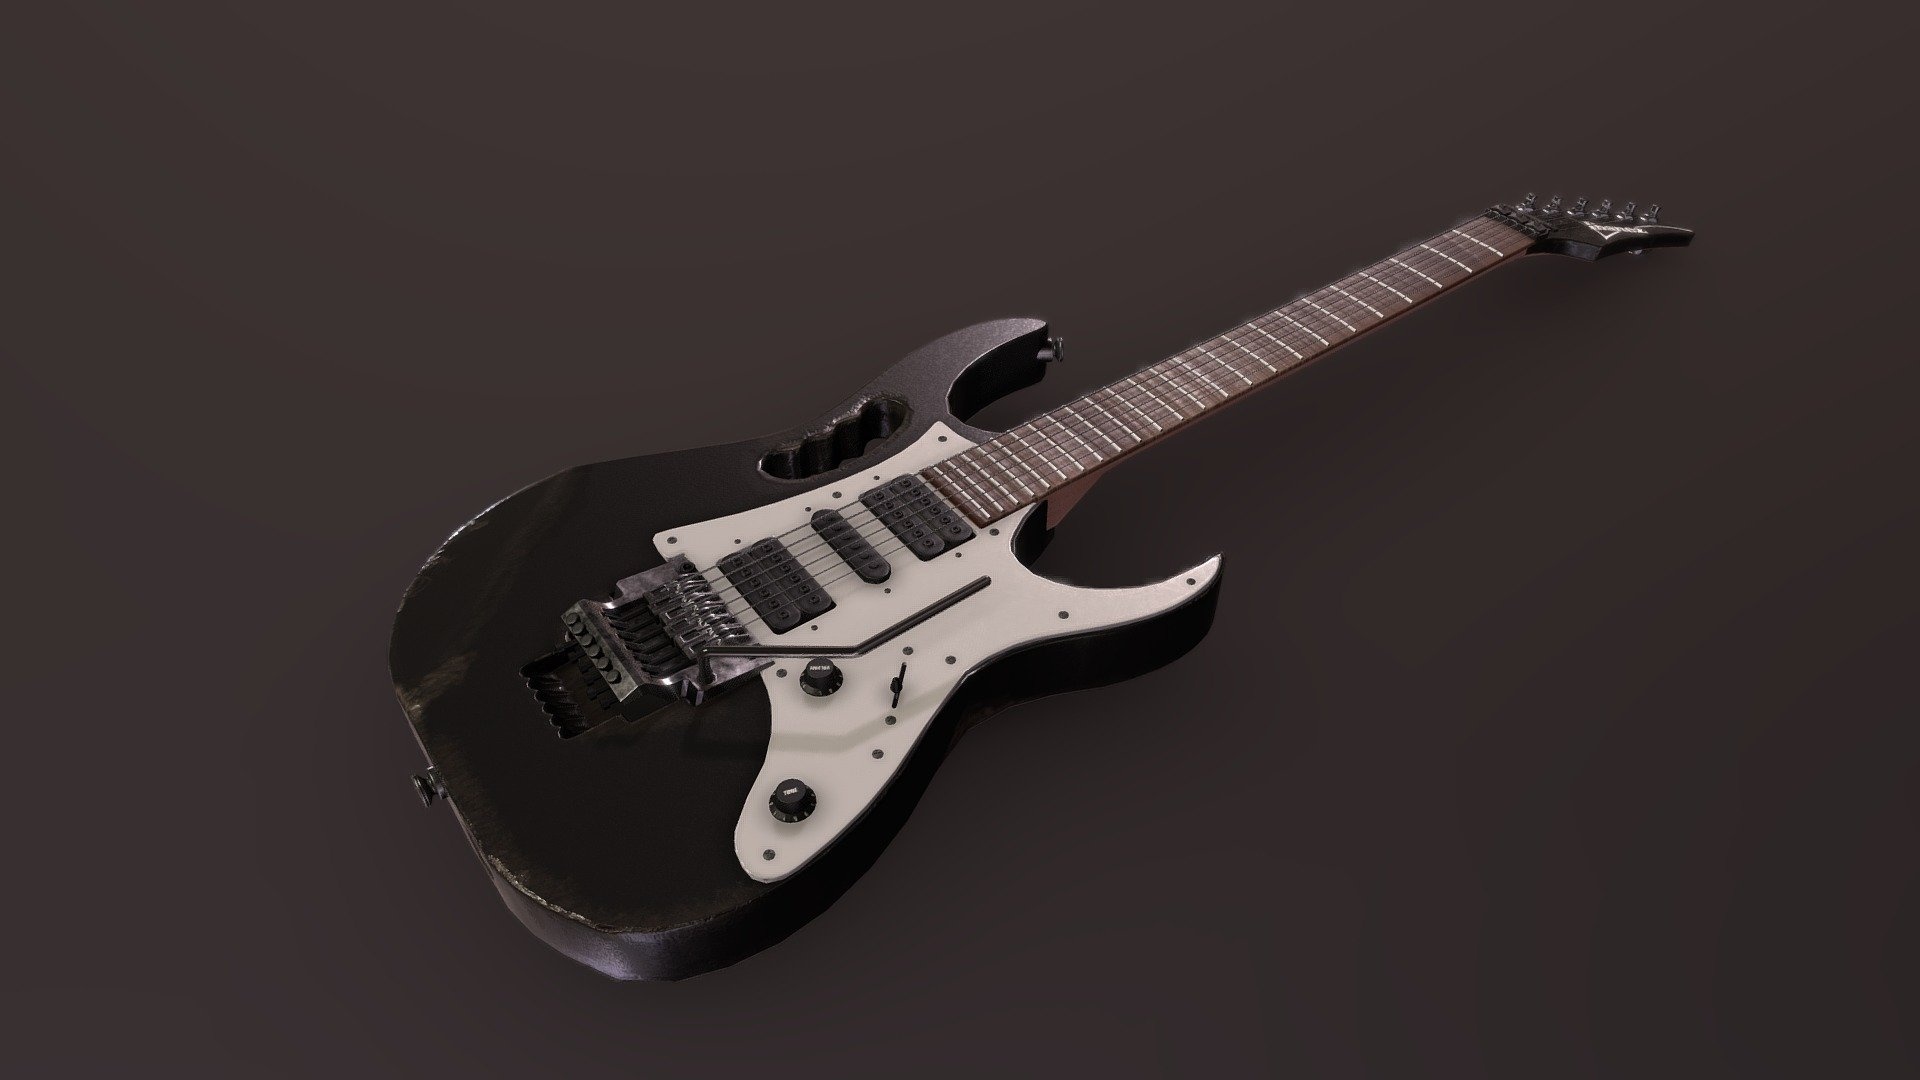 Ibanez Jem guitar, 3D model download, Abazibiz creation, Exquisite craftsmanship, 1920x1080 Full HD Desktop